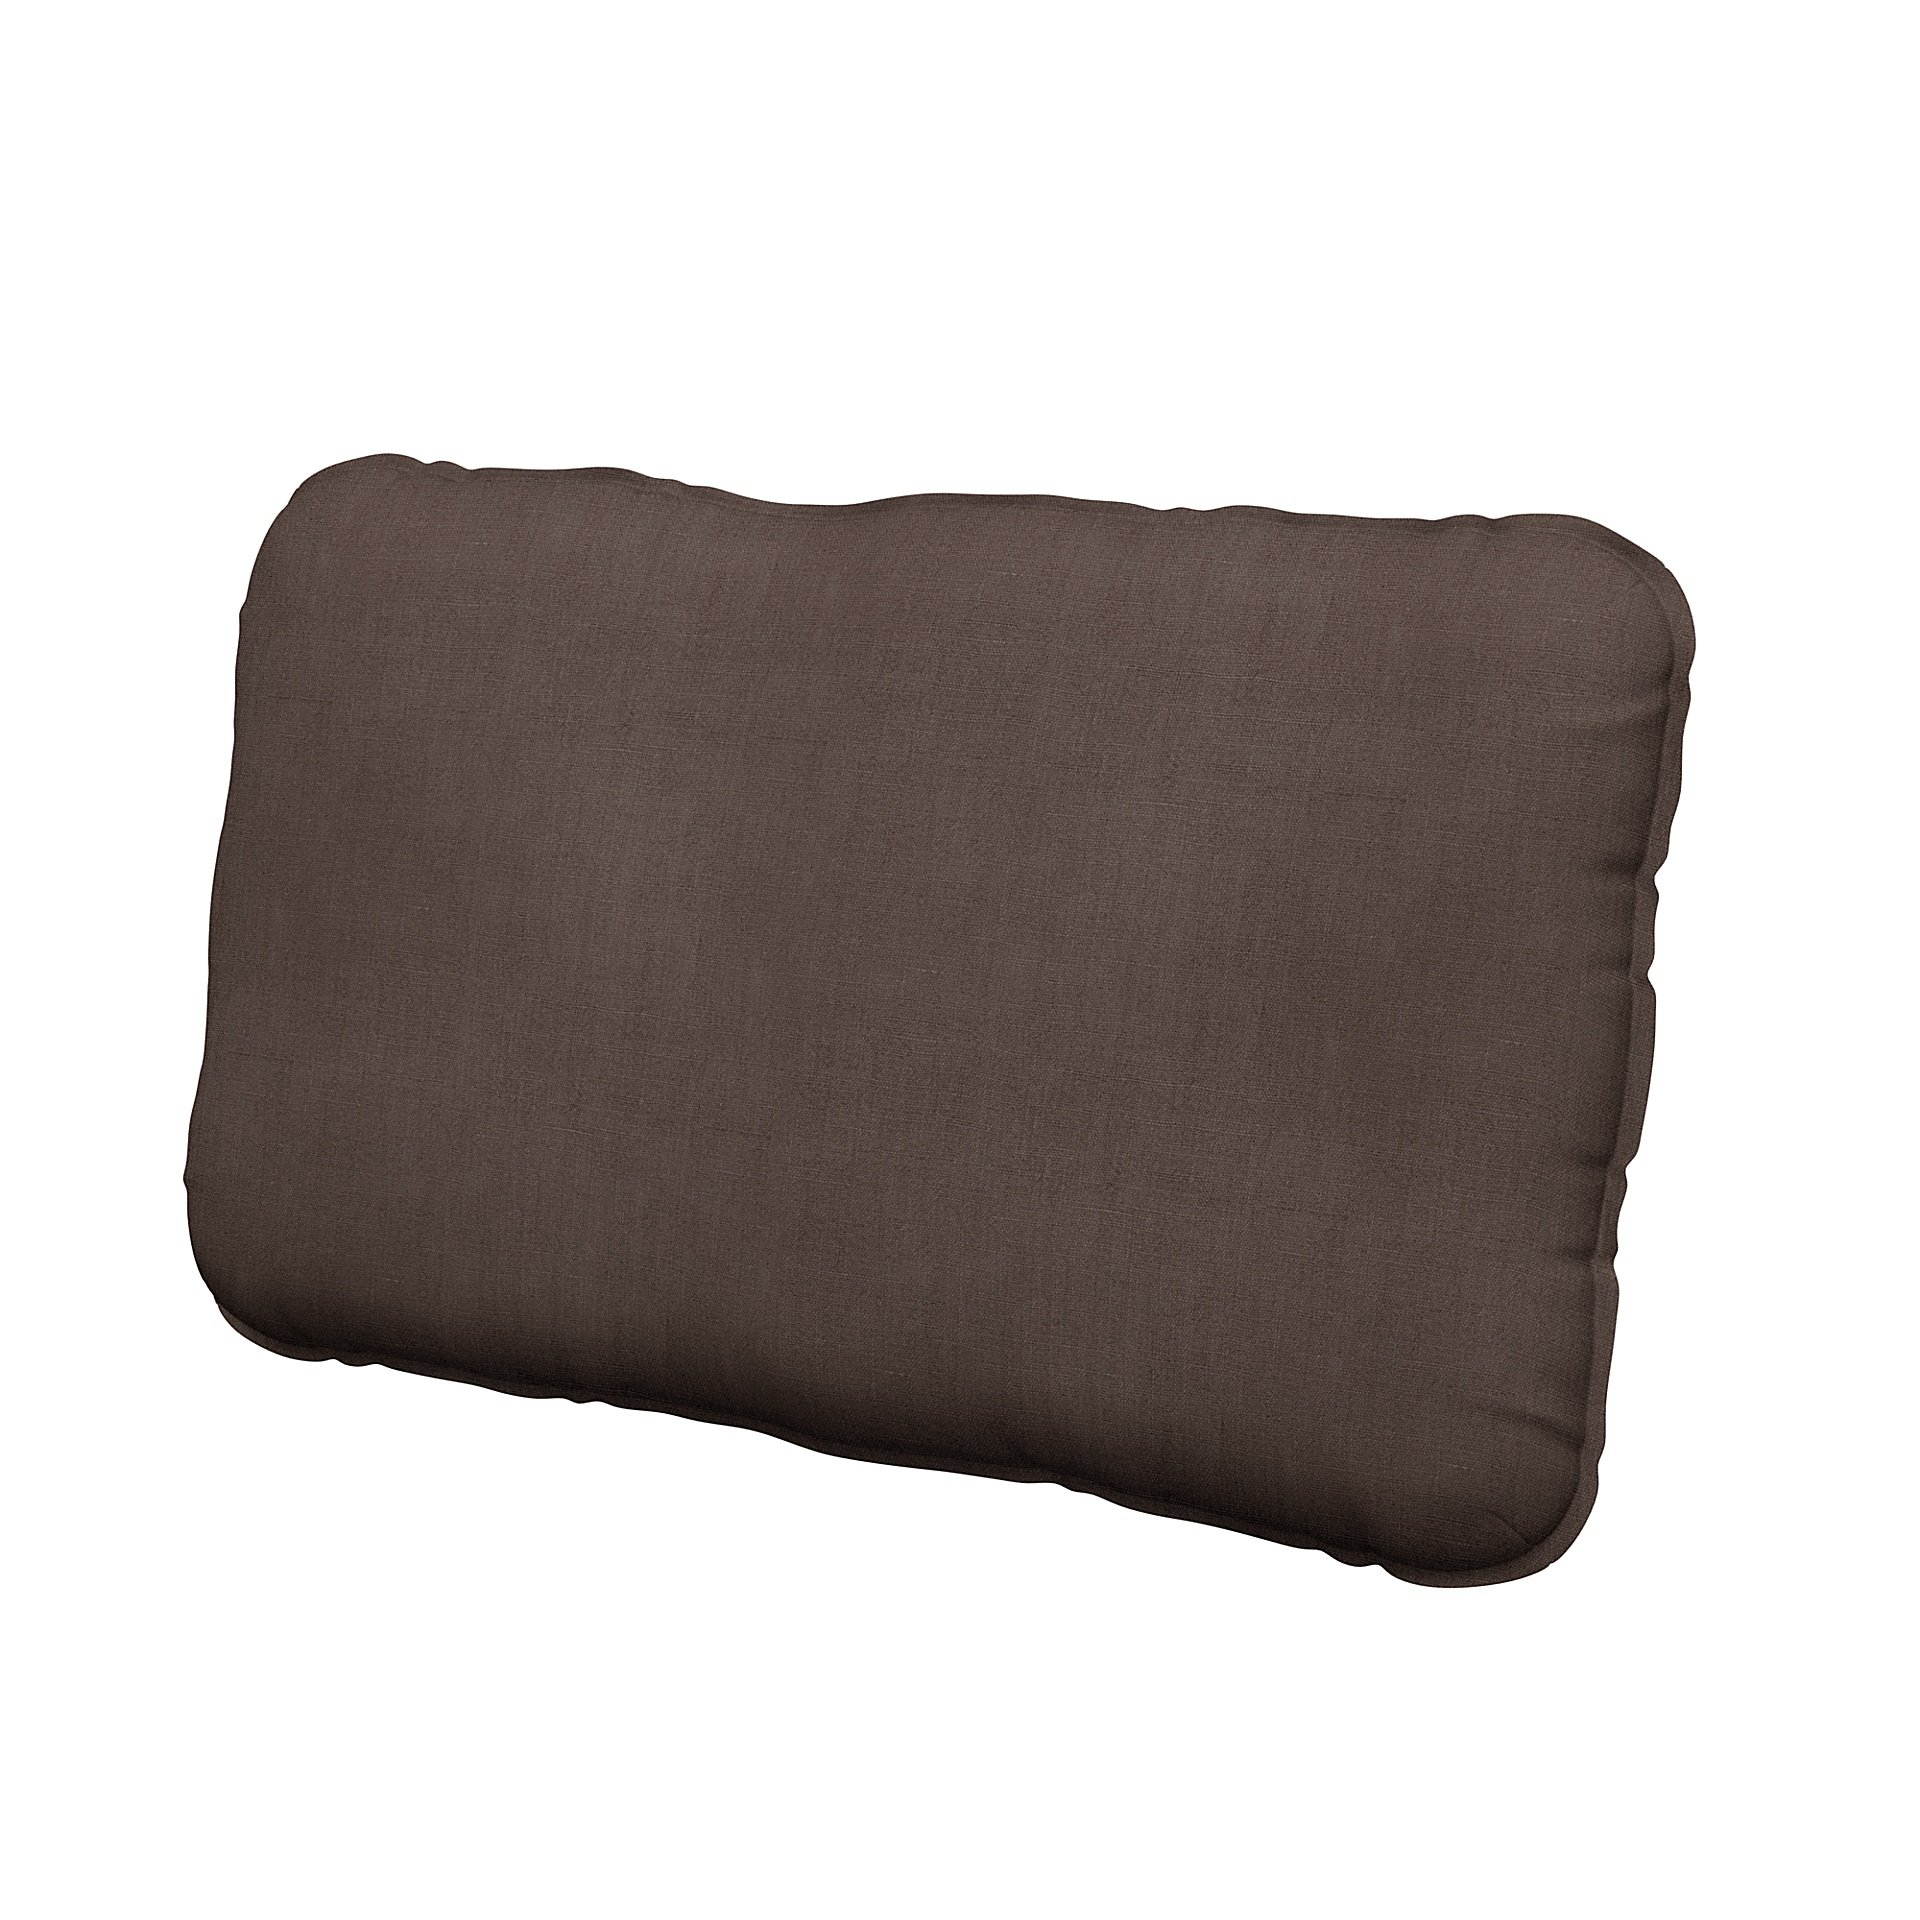 IKEA - Vallentuna back cushion cover 40x75cm, Cocoa, Linen - Bemz